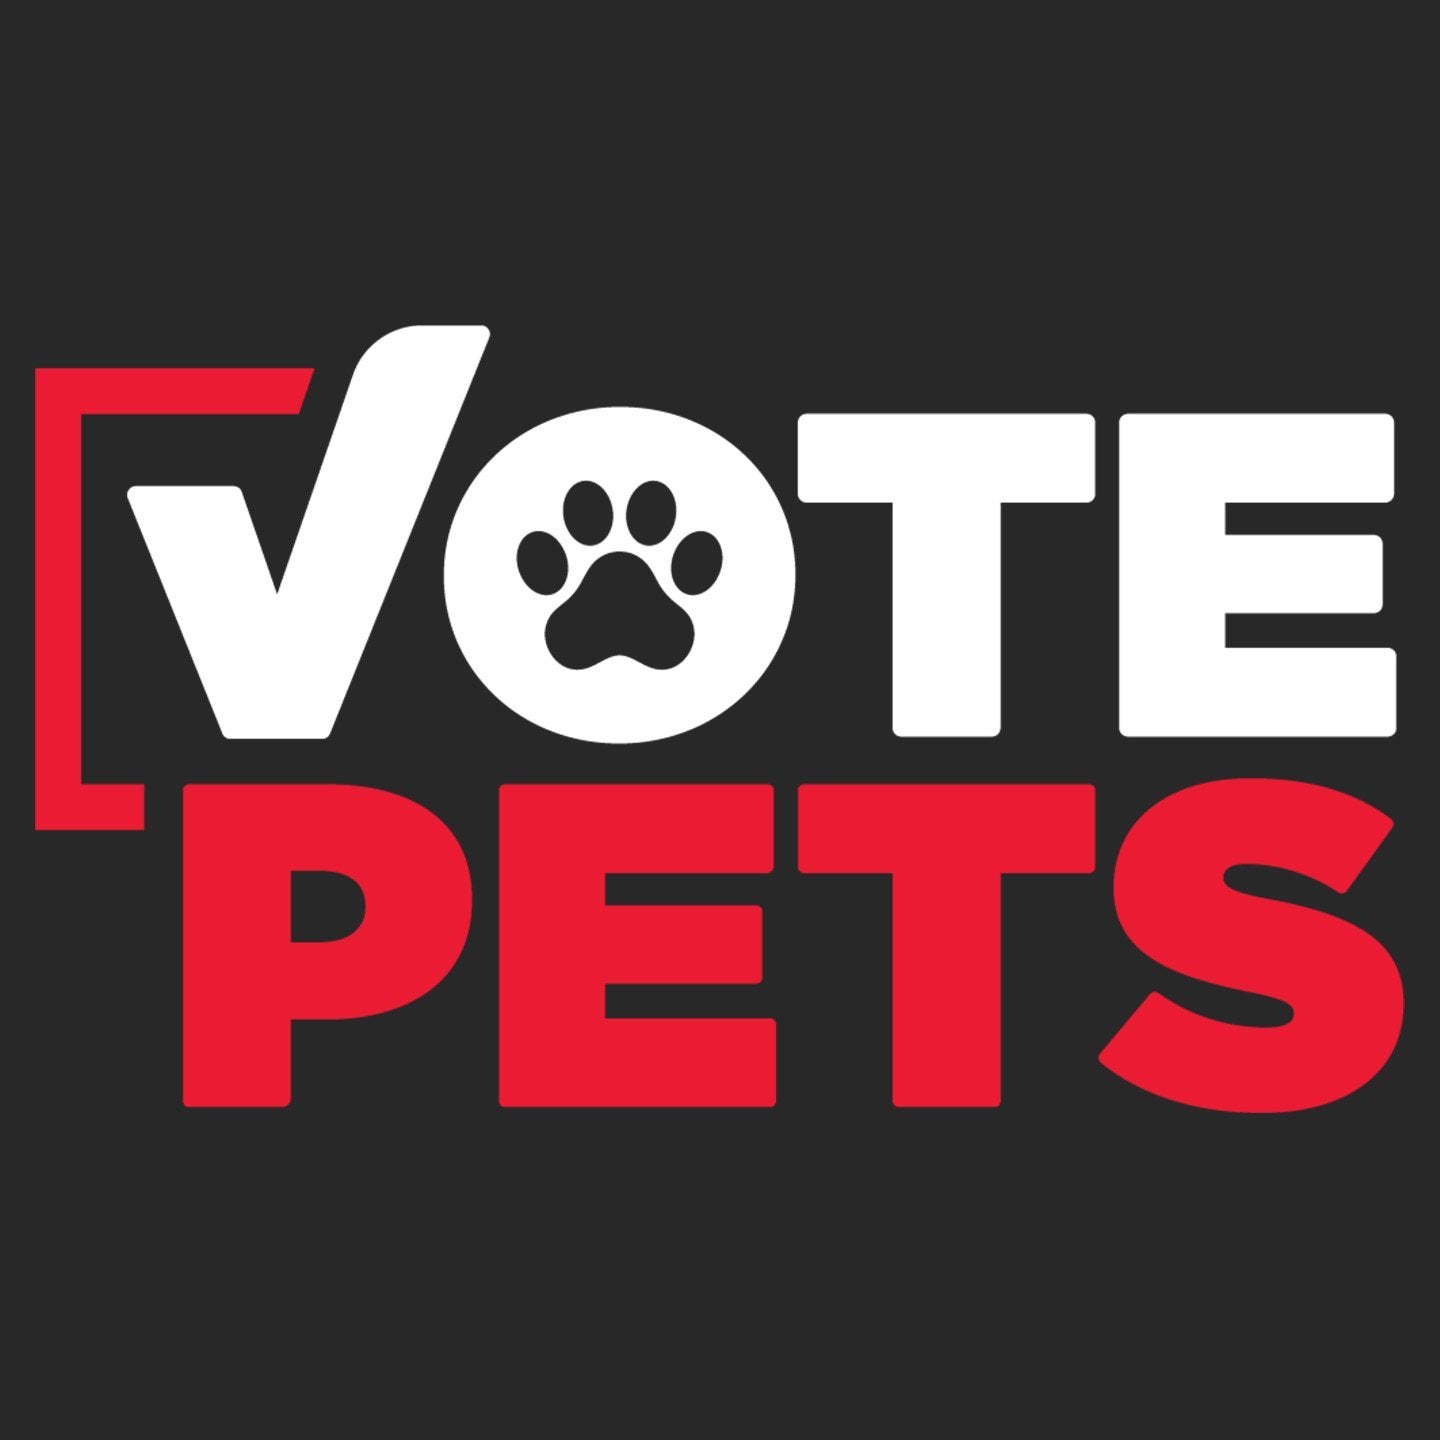 Vote Pets Stacked Logo - Women's V-Neck T-Shirt